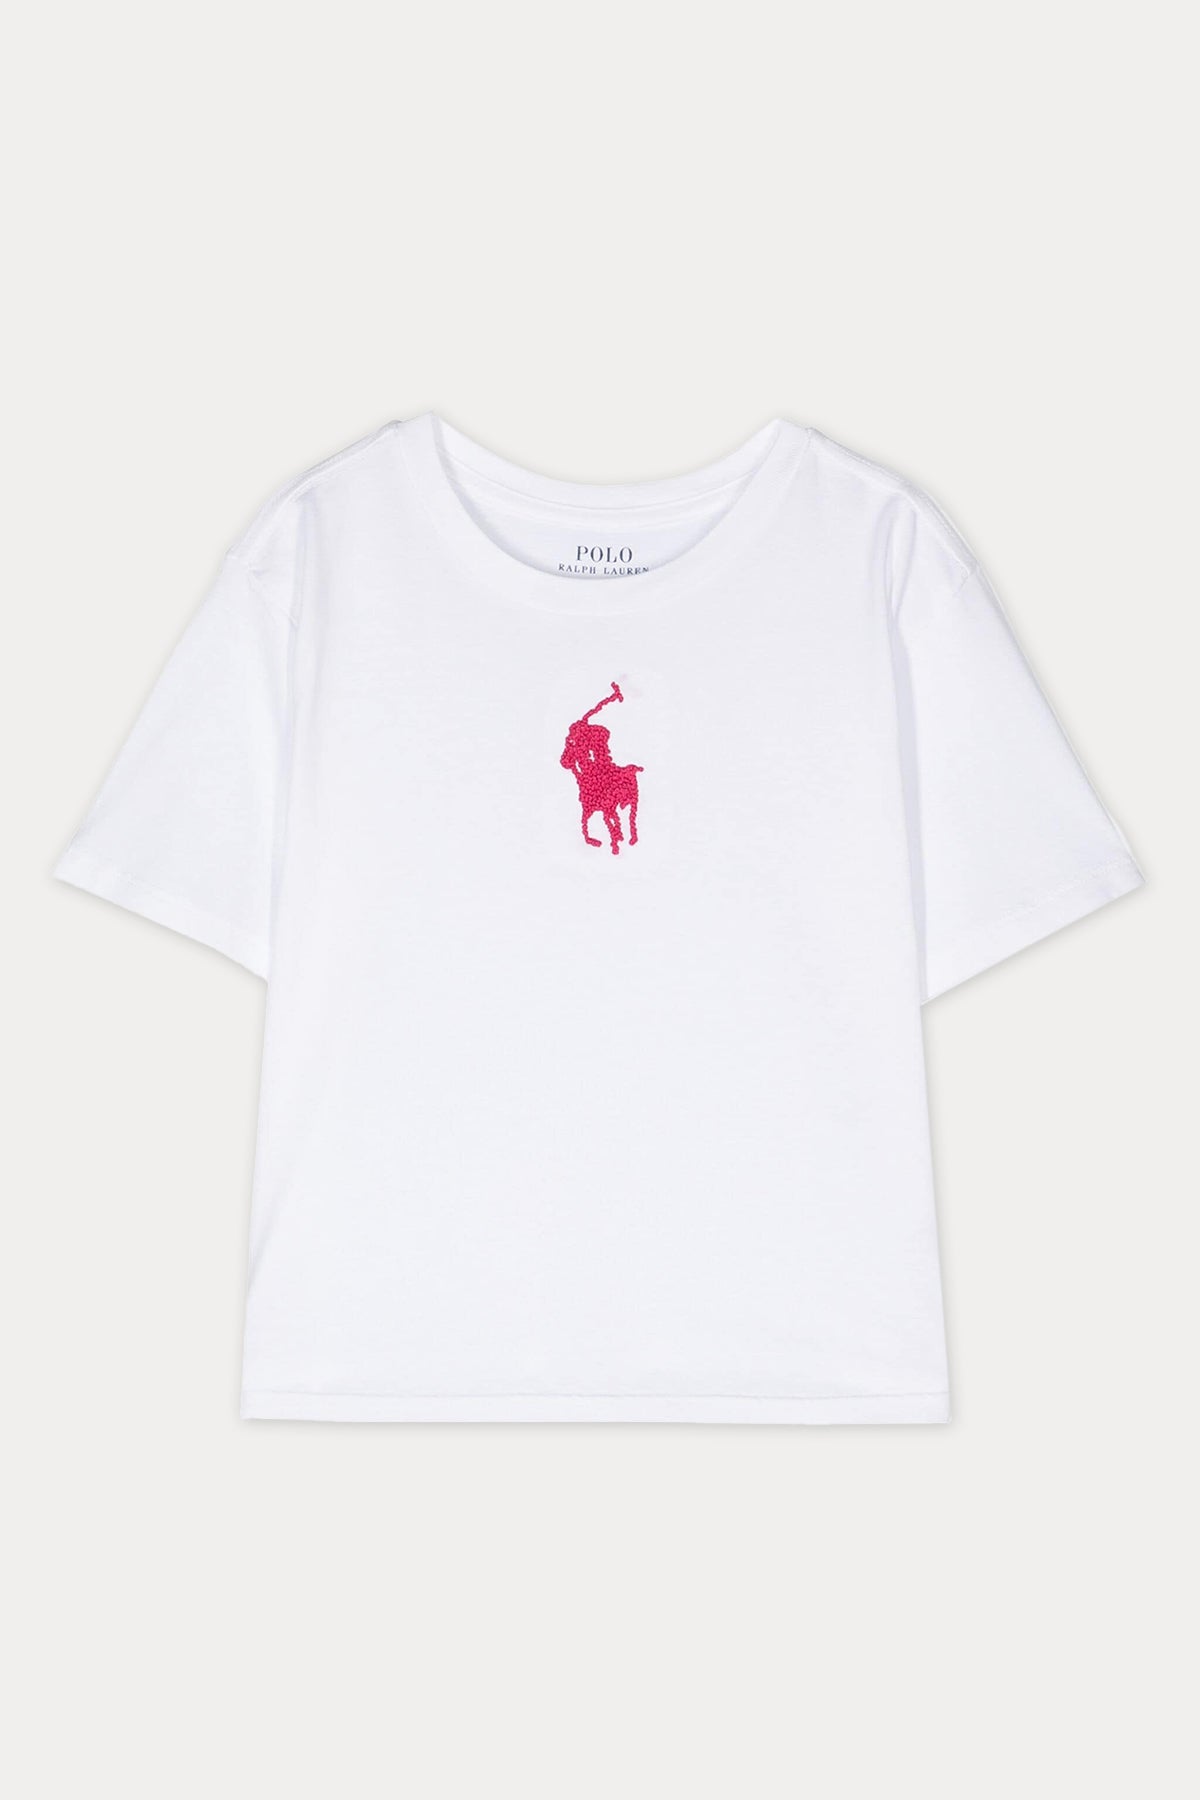 Polo Ralph Lauren Kids S-M Beden Kız Çocuk Yuvarlak Yaka T-shirt